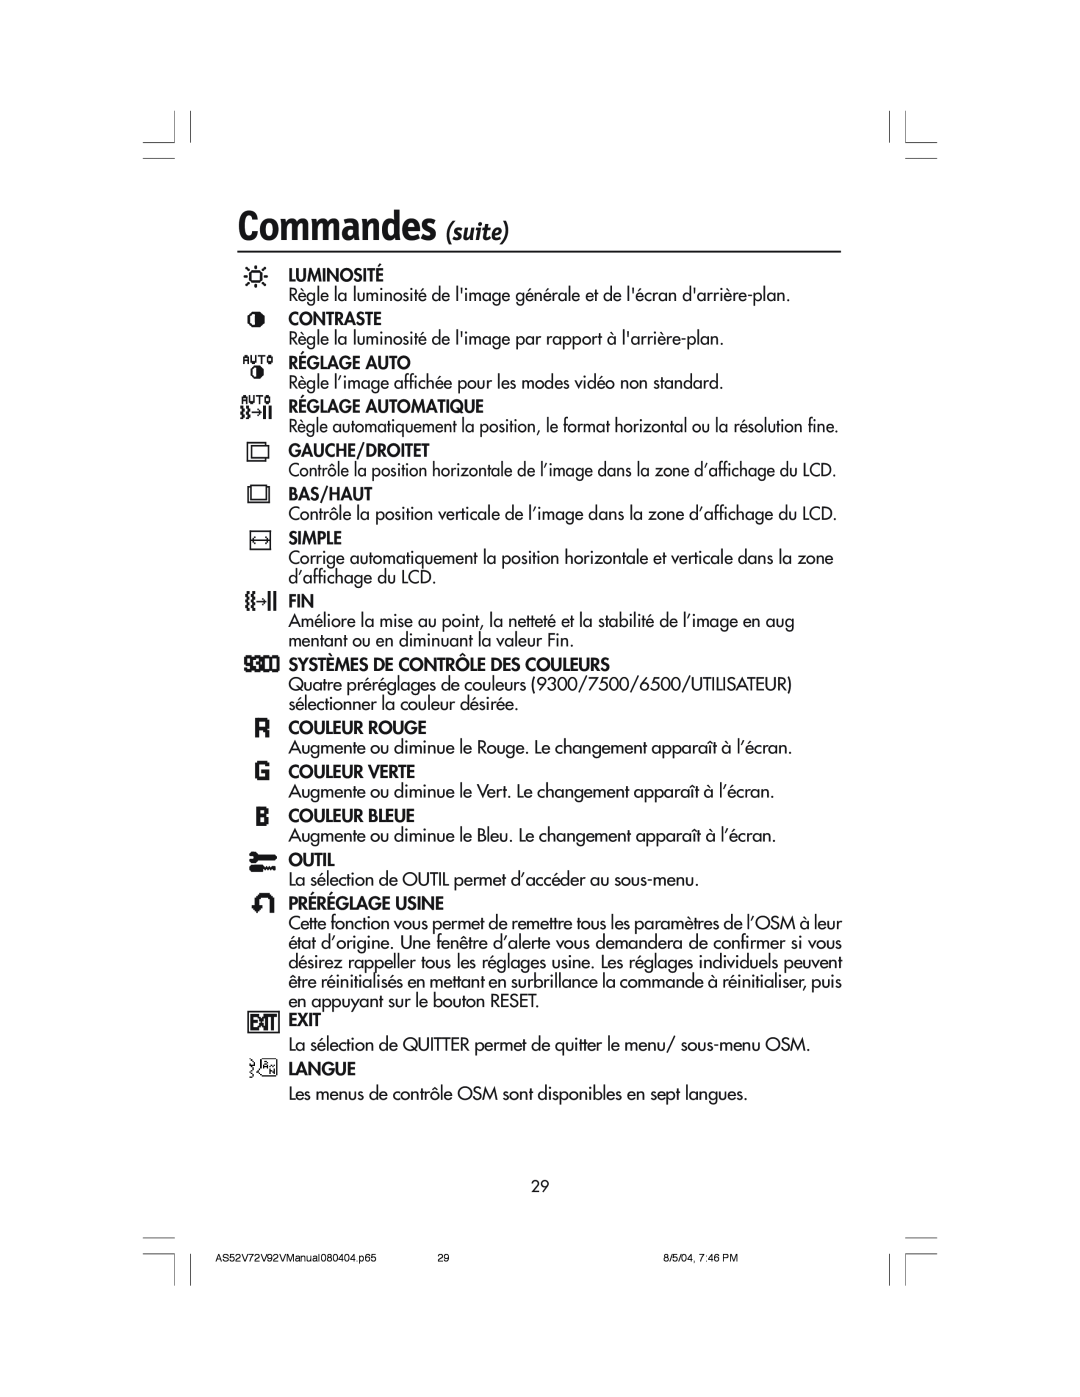 NEC LCD52V, LCD72V manual Commandes suite 